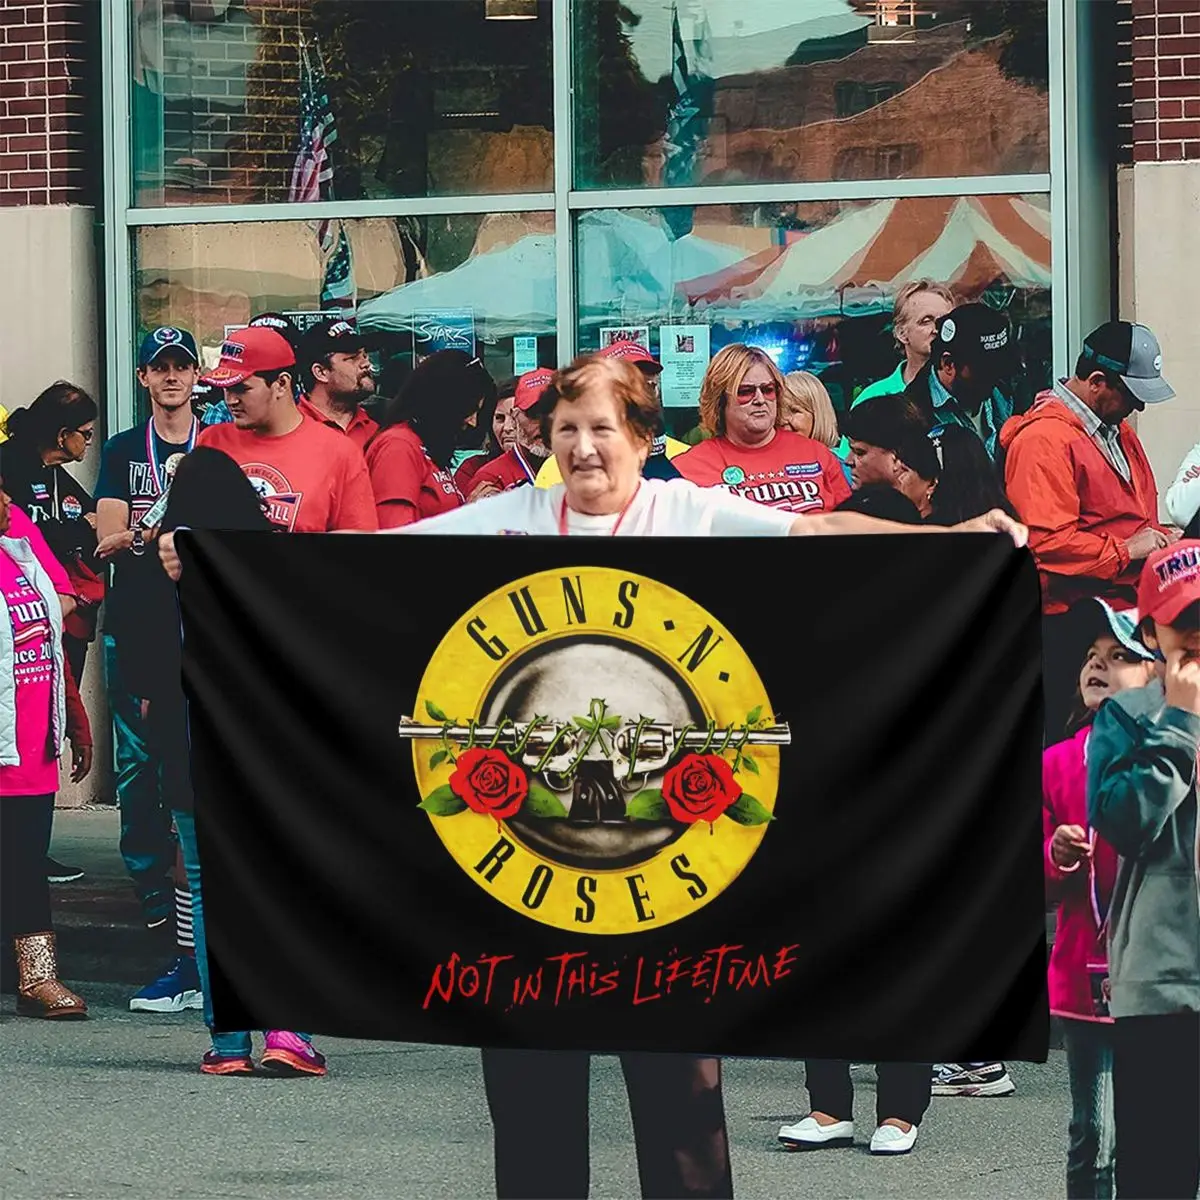 Bandera oficial de Guns N Roses no In This Lifetime Tour, ciudad del desierto, guerra Civil